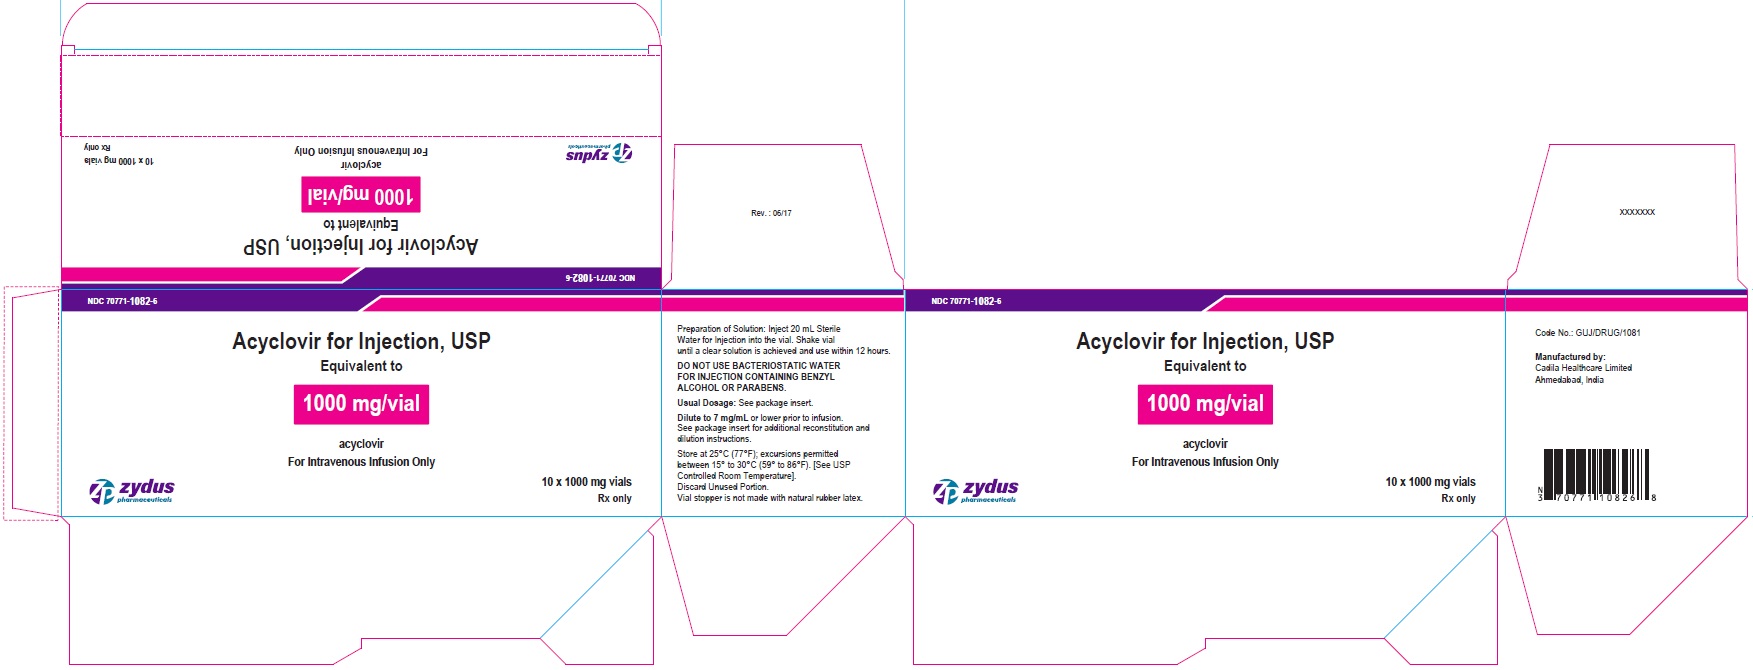 Acyclovir for Injection USP, 1000 mg/vial